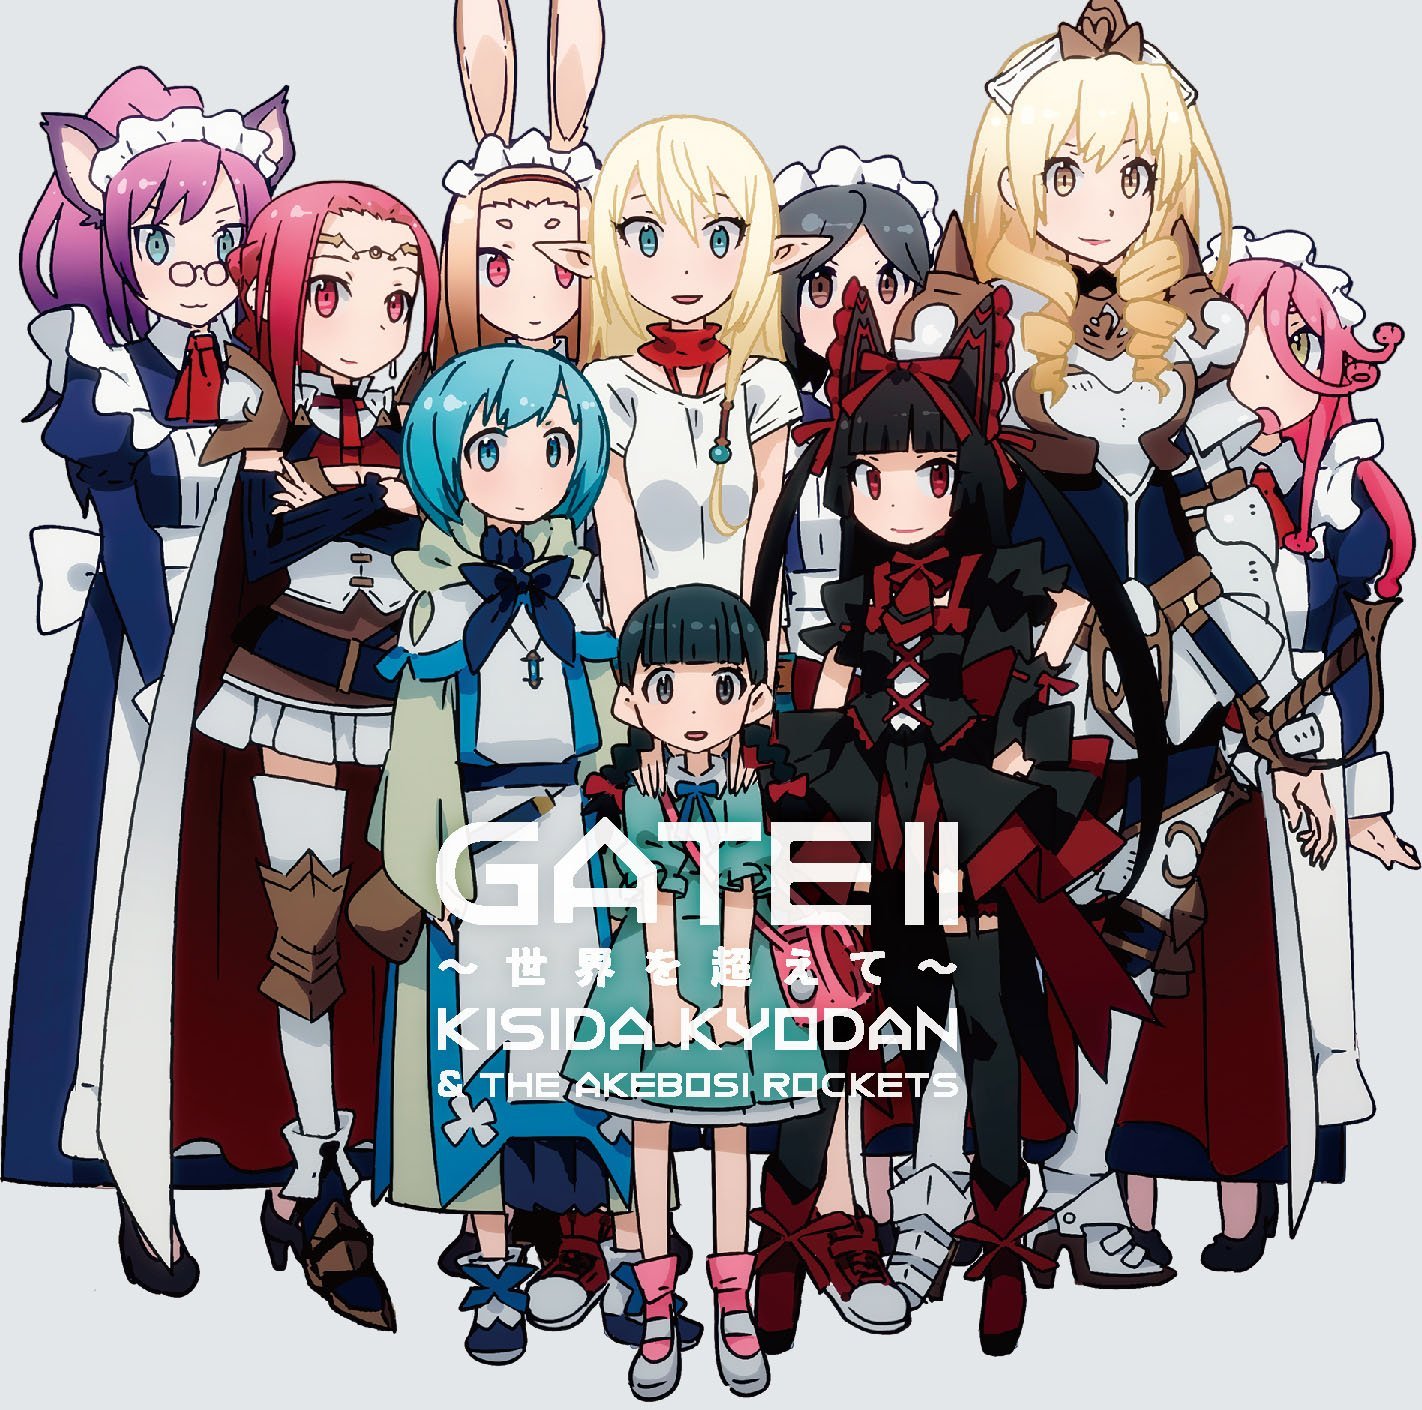 Gate (Anime) : Rory Mercury by Texhnolized on DeviantArt